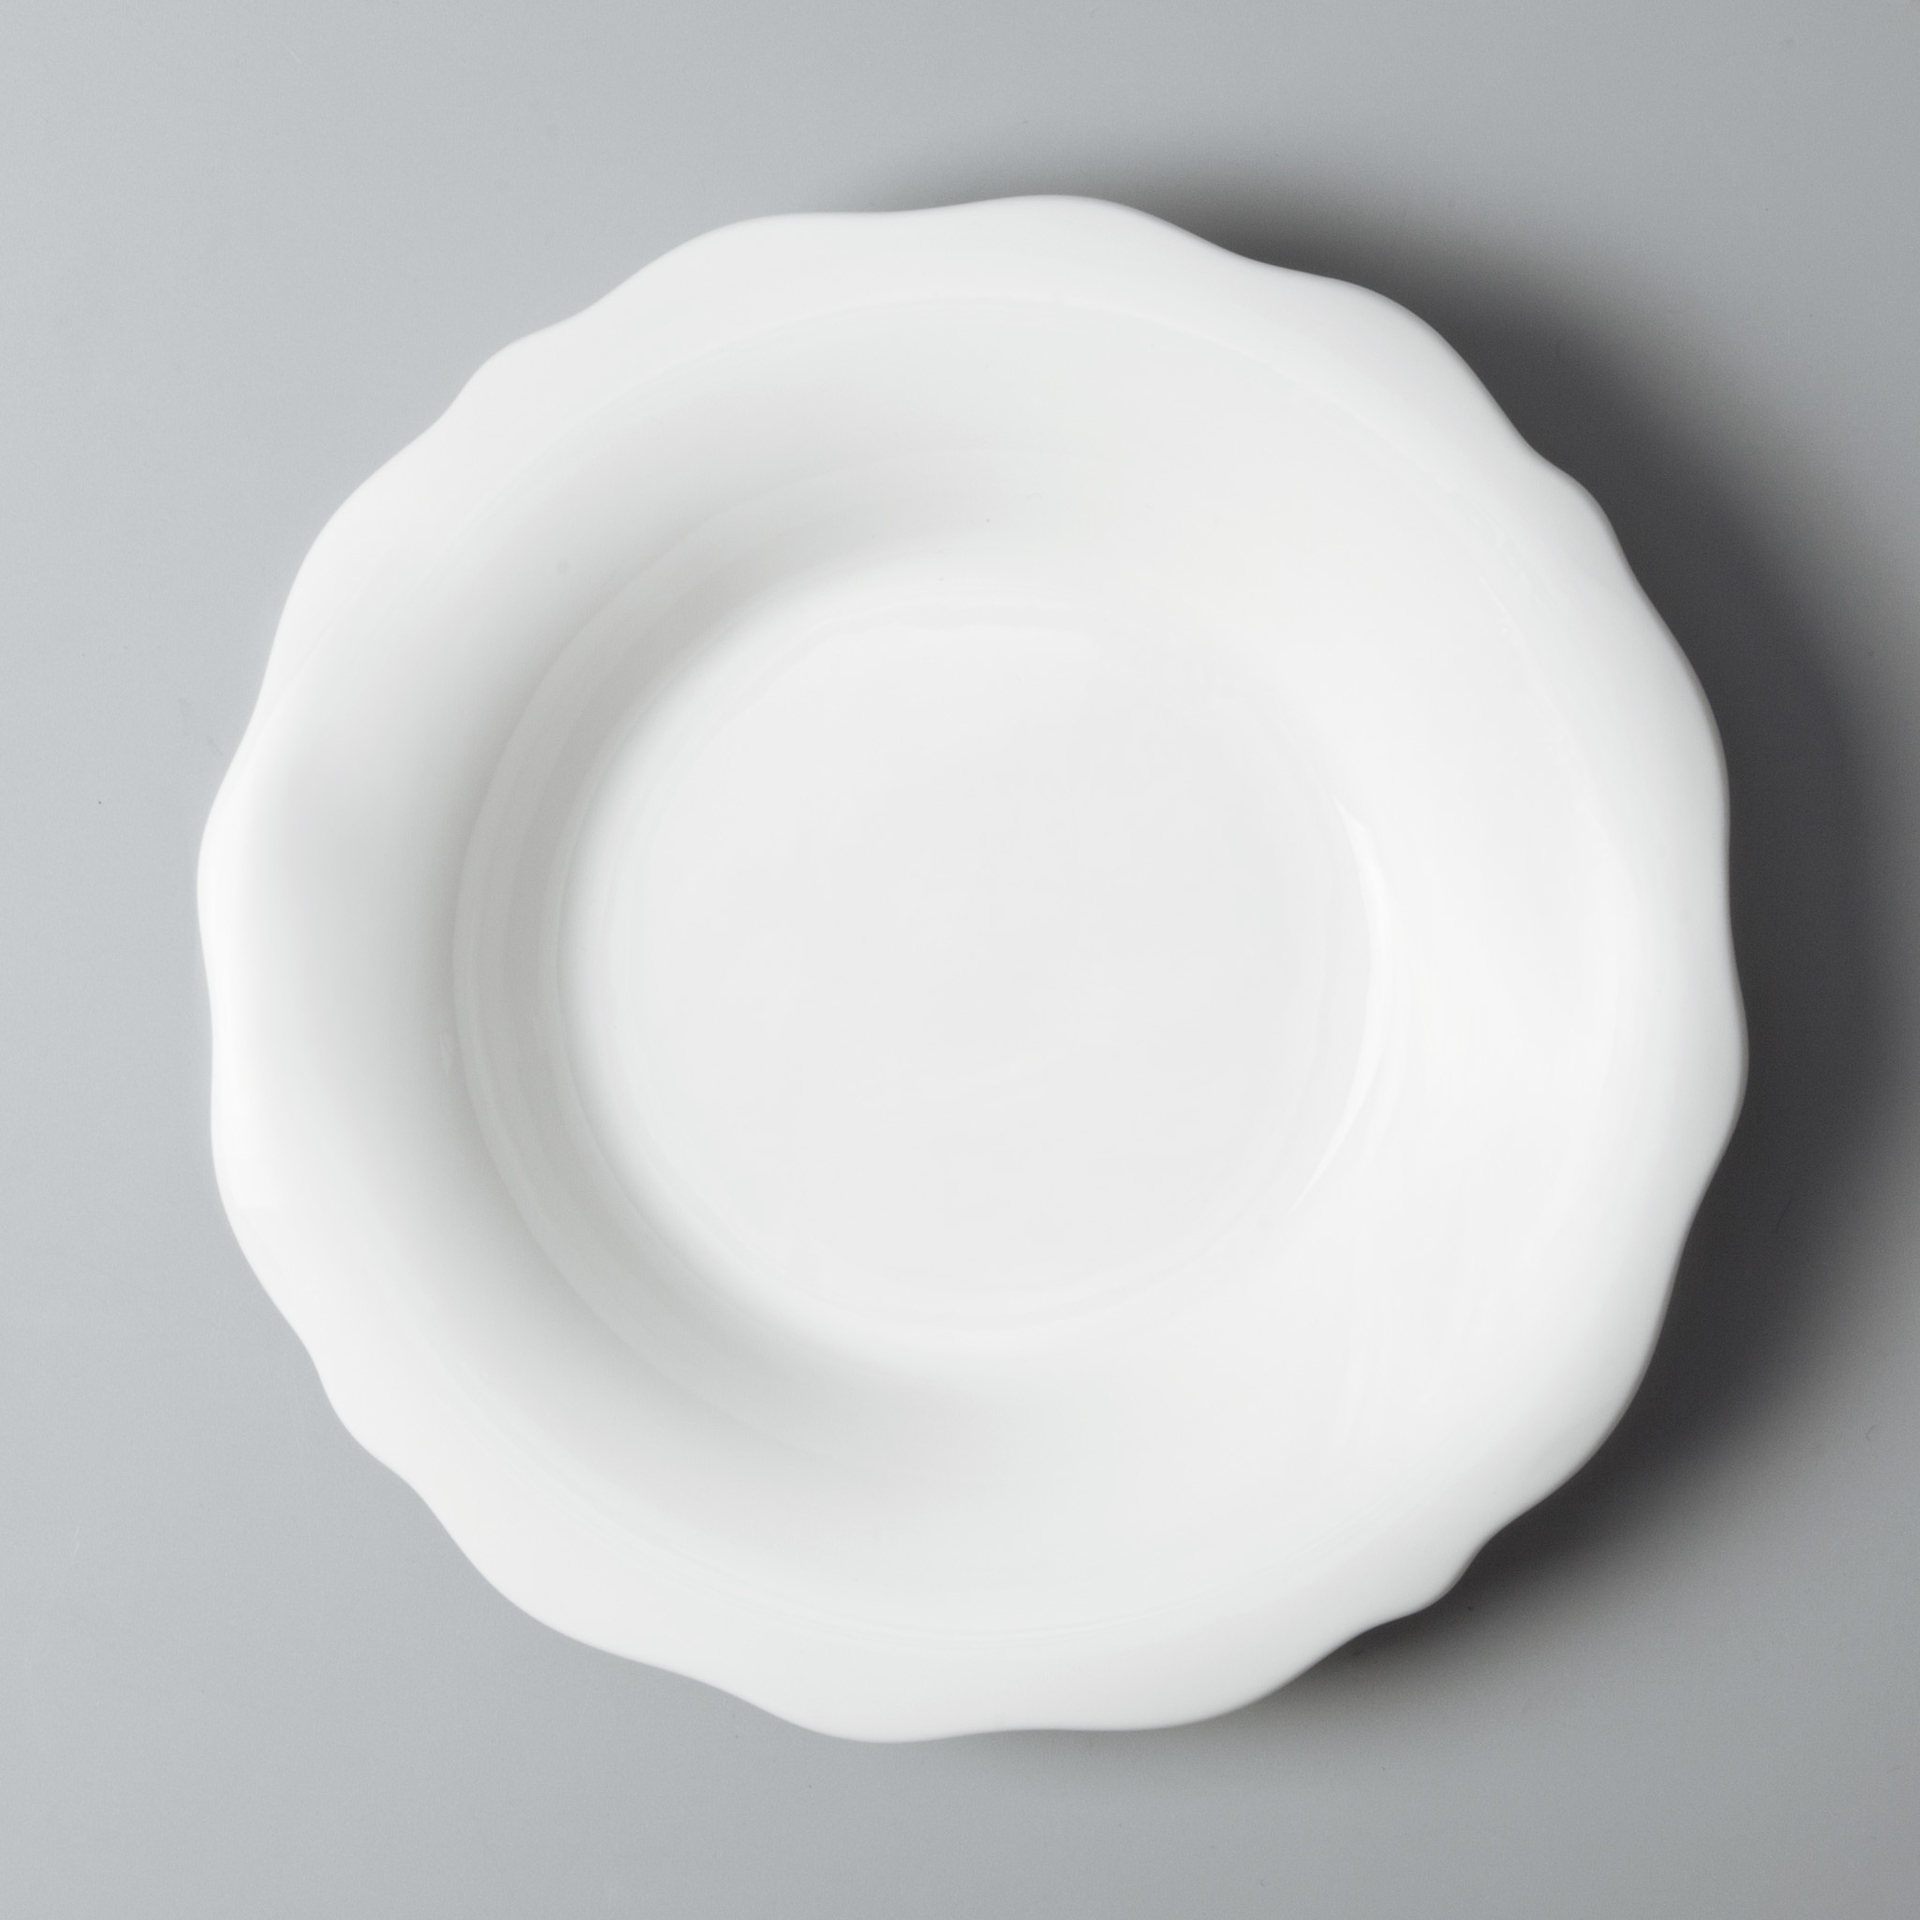 casual white porcelain dish set series for restaurant